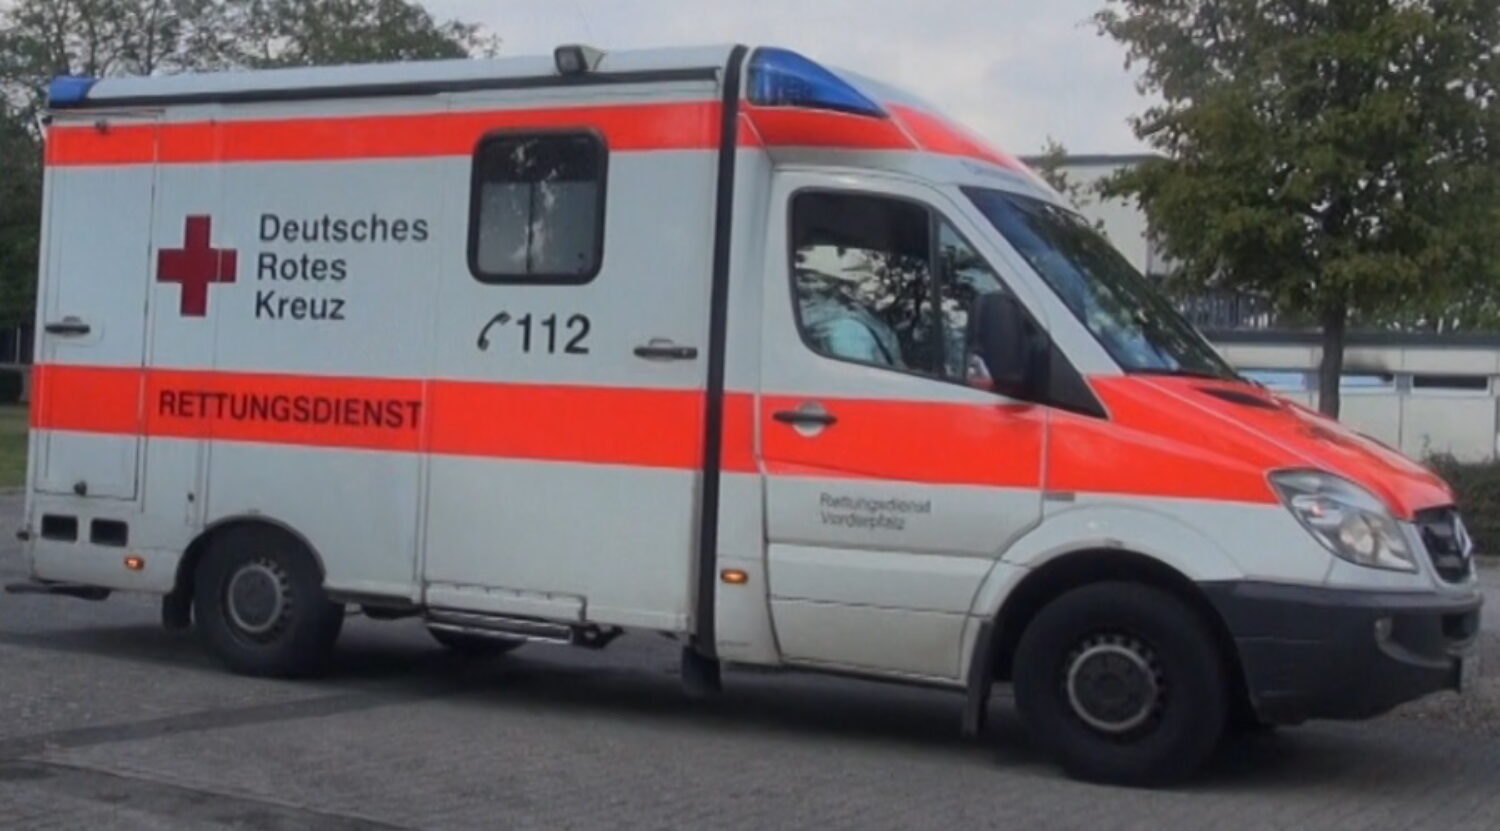 Rhein-Neckar-Kreis / L 535 – NACHTRAG – Verkehrsunfall, zwei leicht verletzte Personen